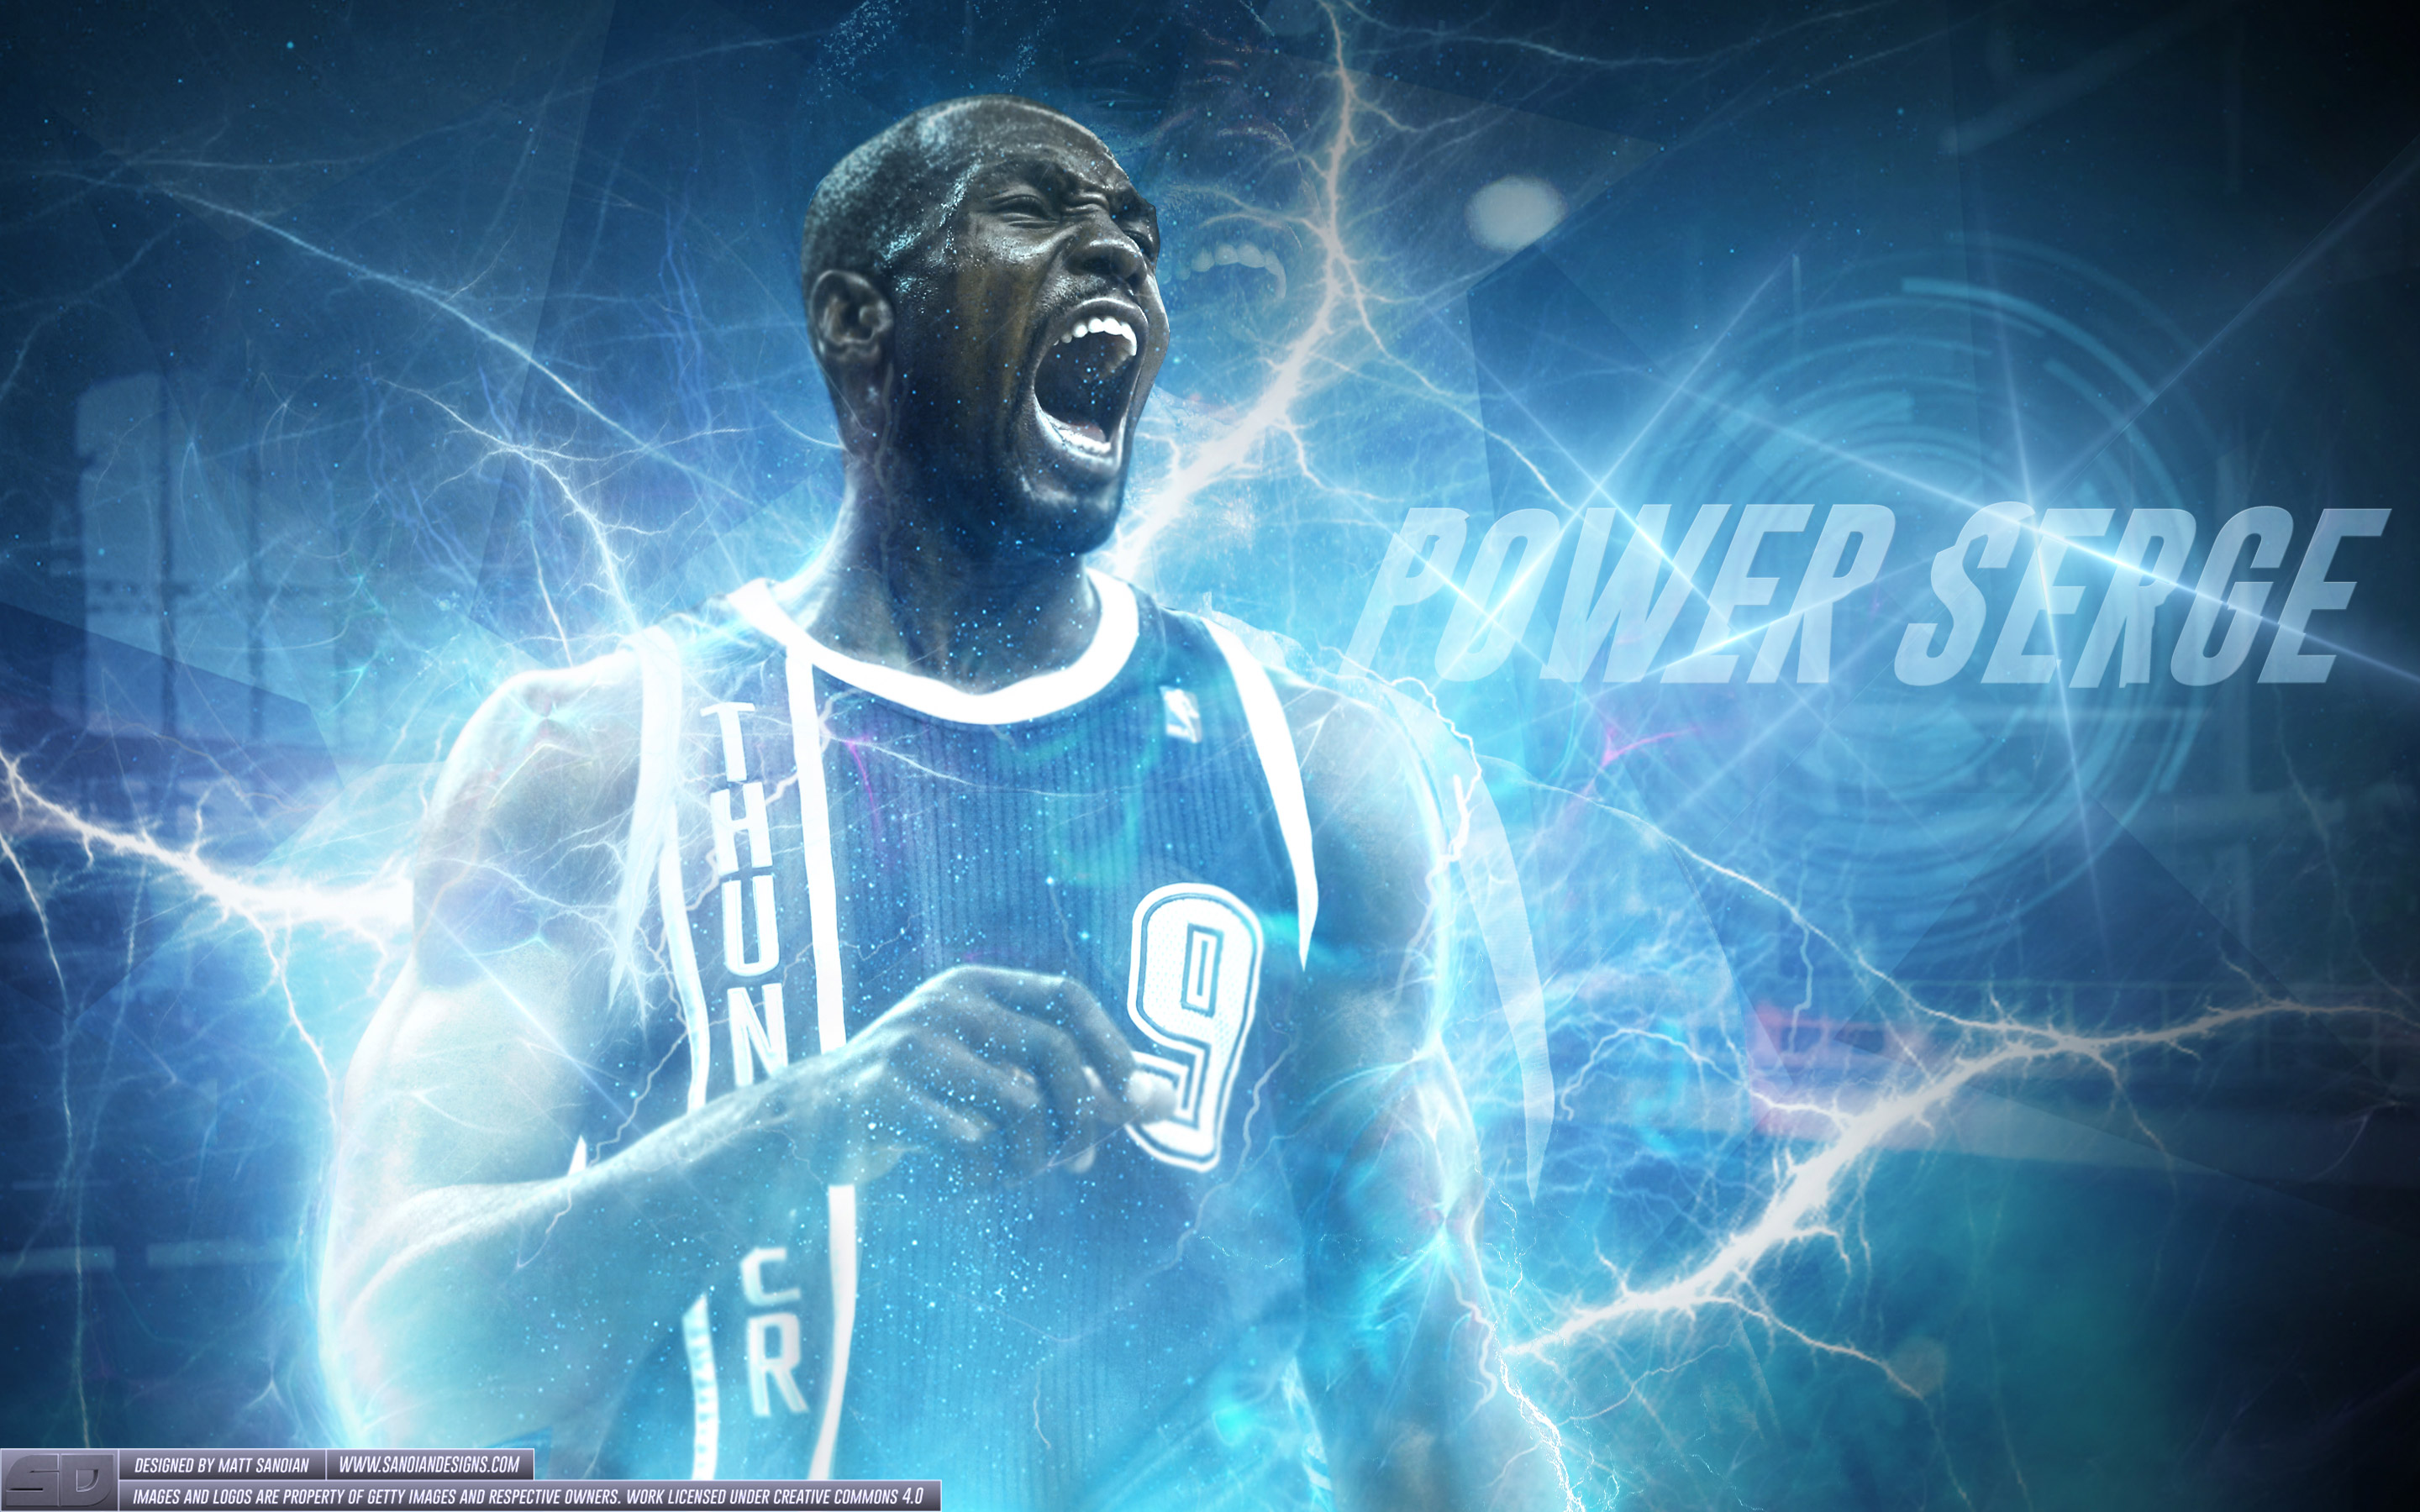 Serge Ibaka OKC Thunder 2014 Wallpaper | Basketball Wallpapers at BasketWallpapers.com